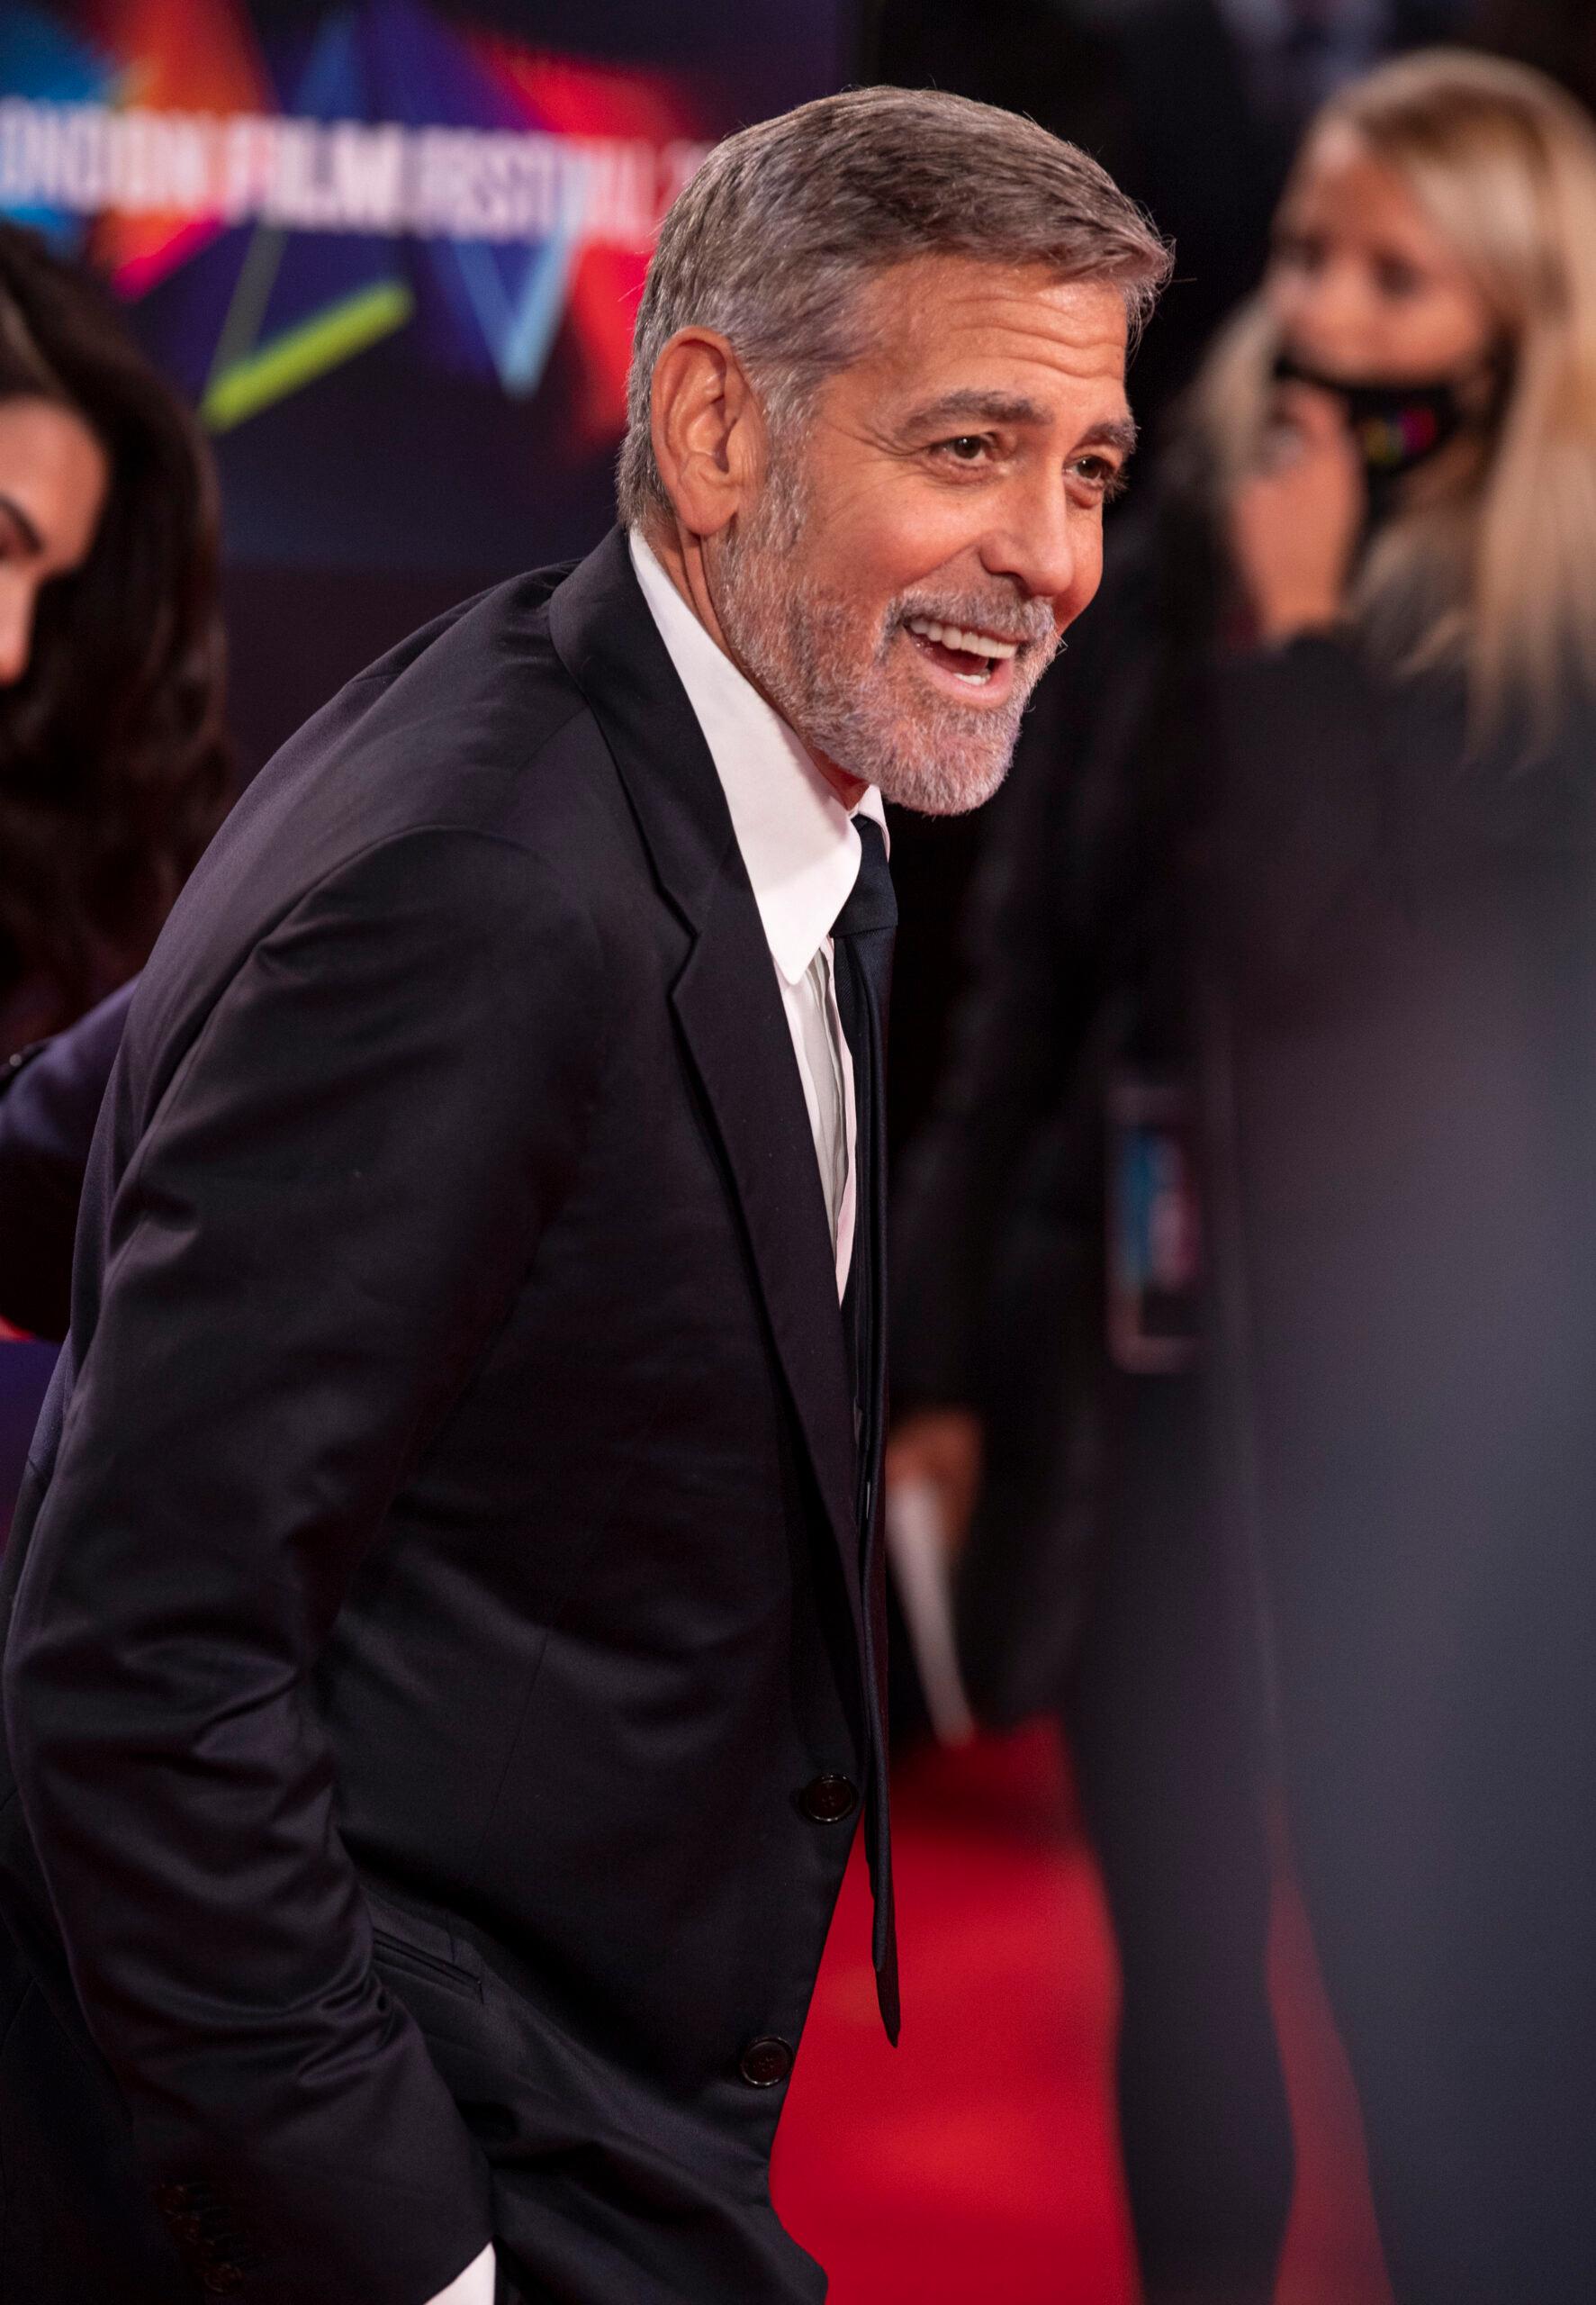 George Clooney at The Tender Bar Premiere